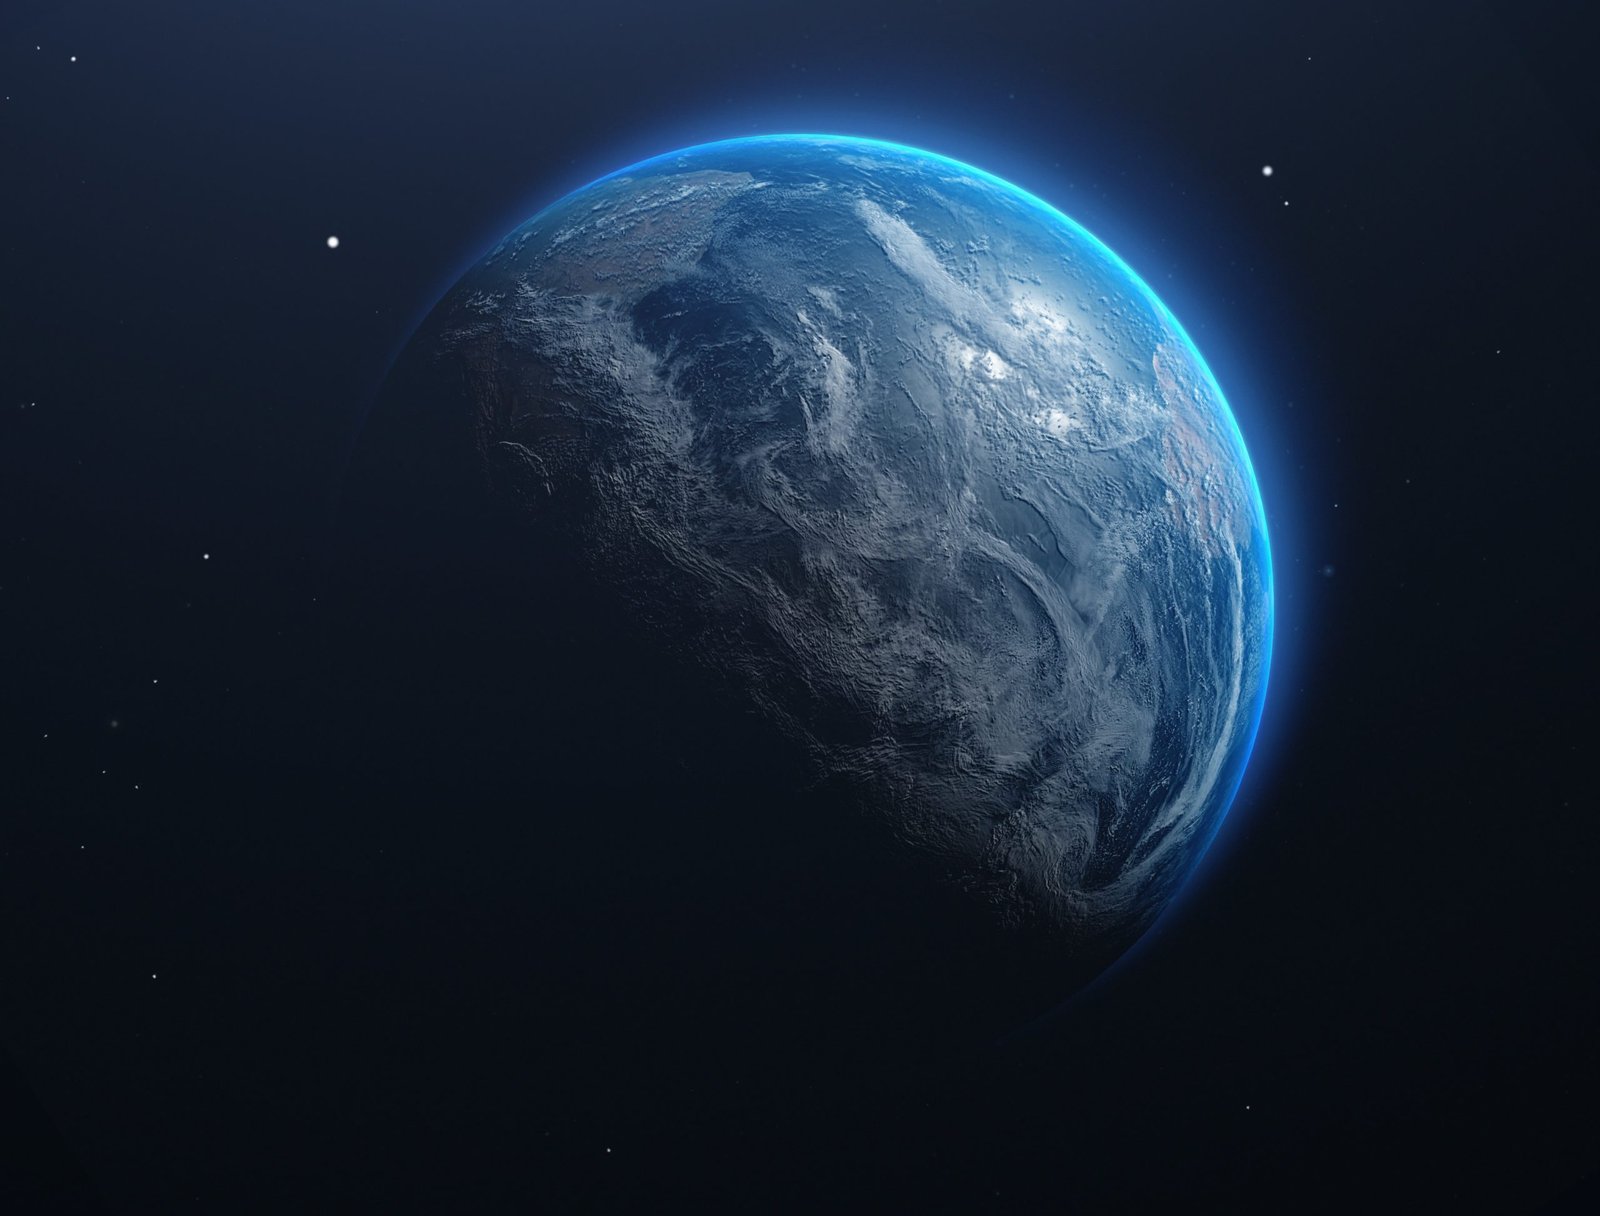 Earth Planet